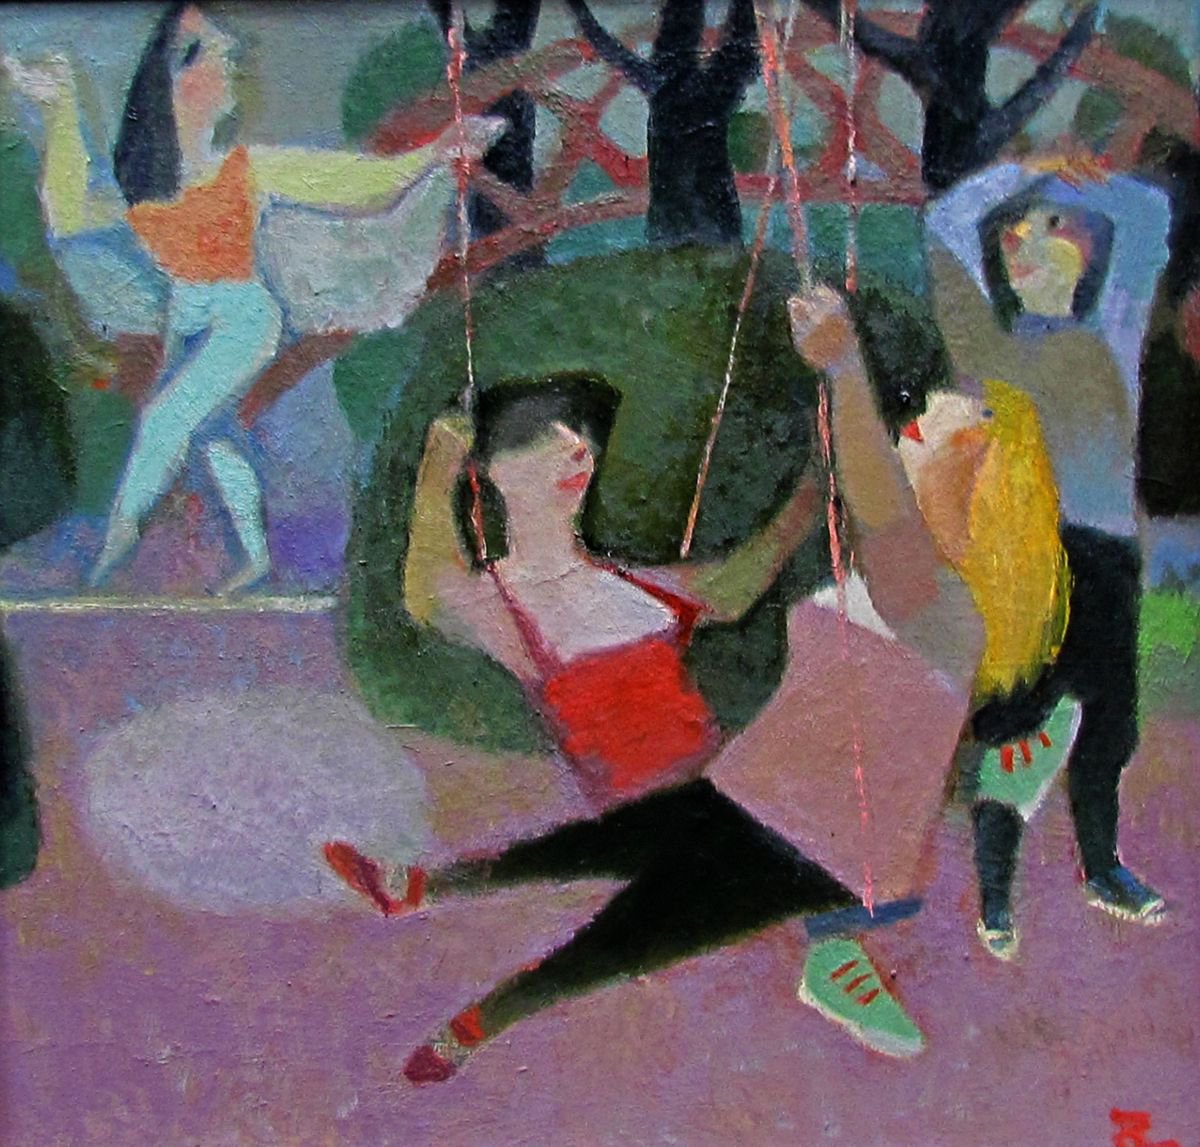 The Swing by Teimuraz Gagnidze